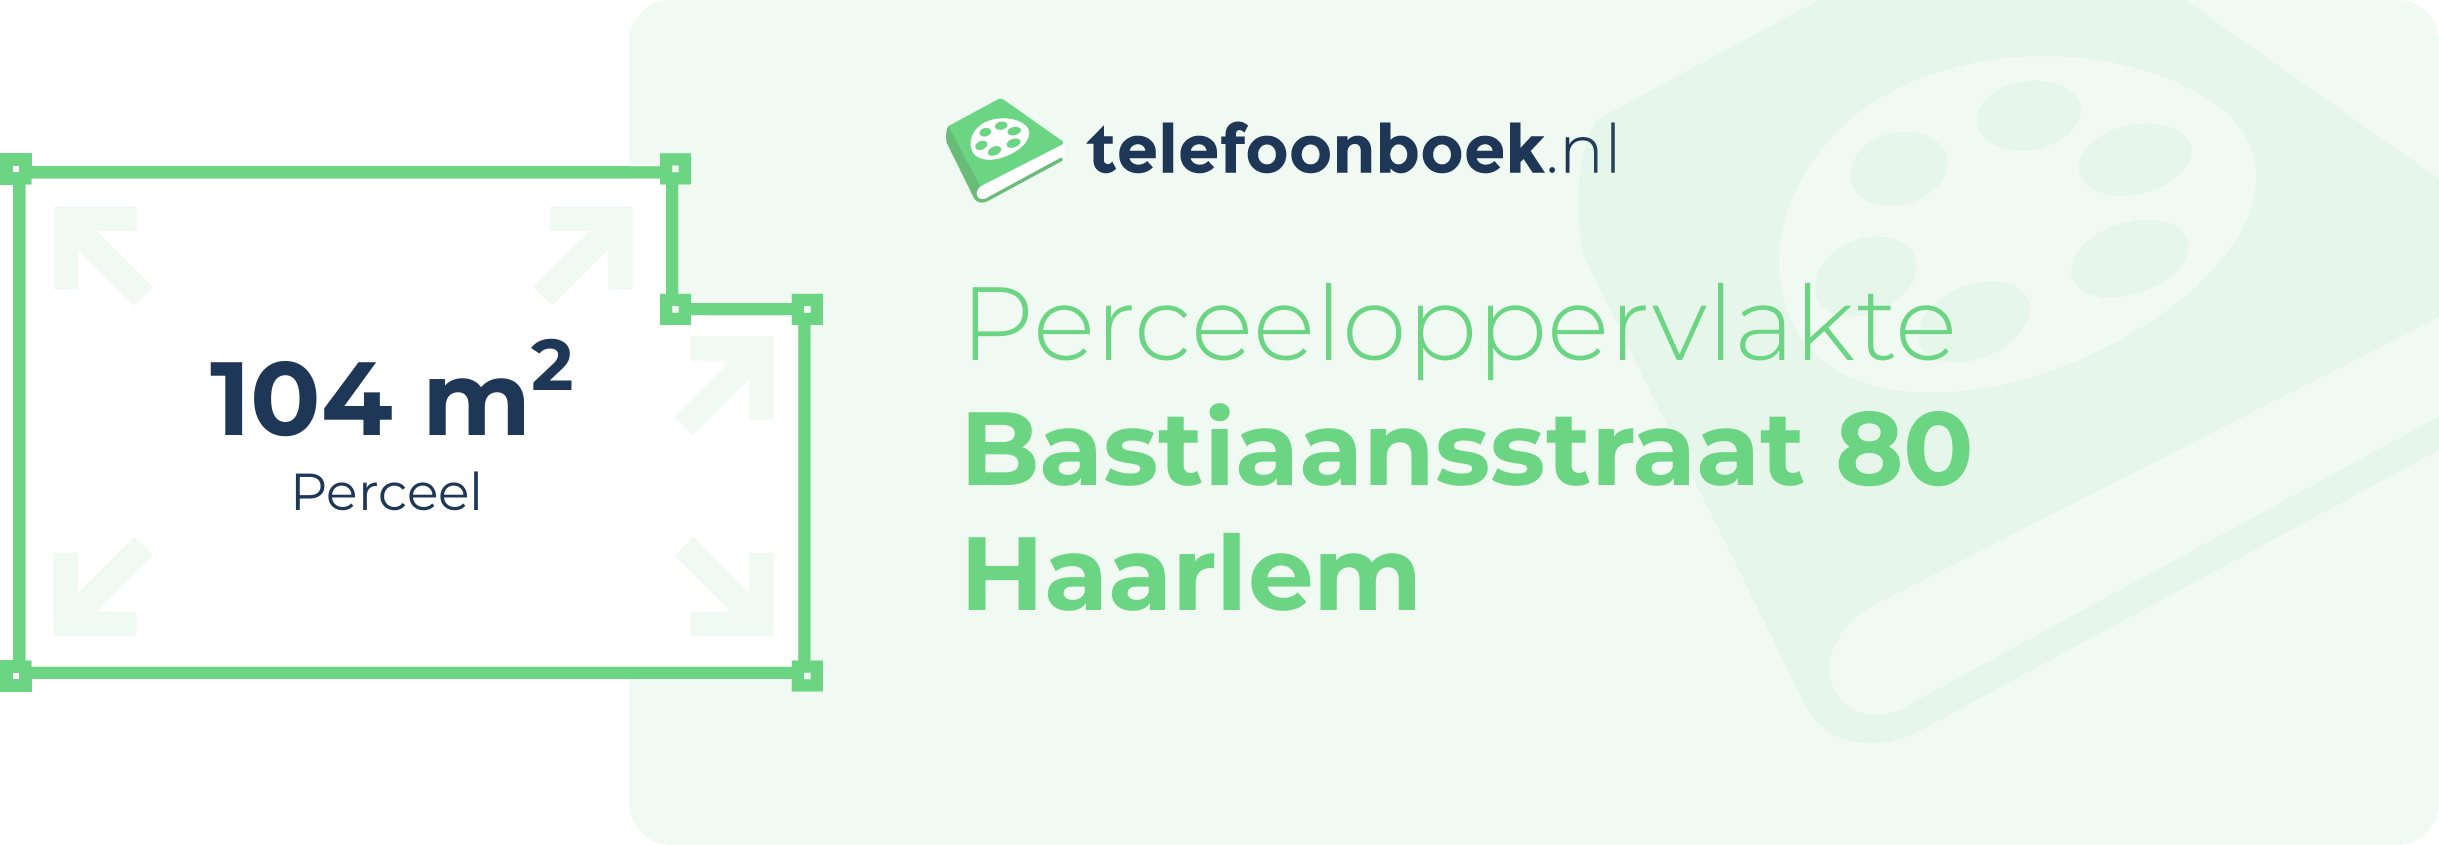 Perceeloppervlakte Bastiaansstraat 80 Haarlem